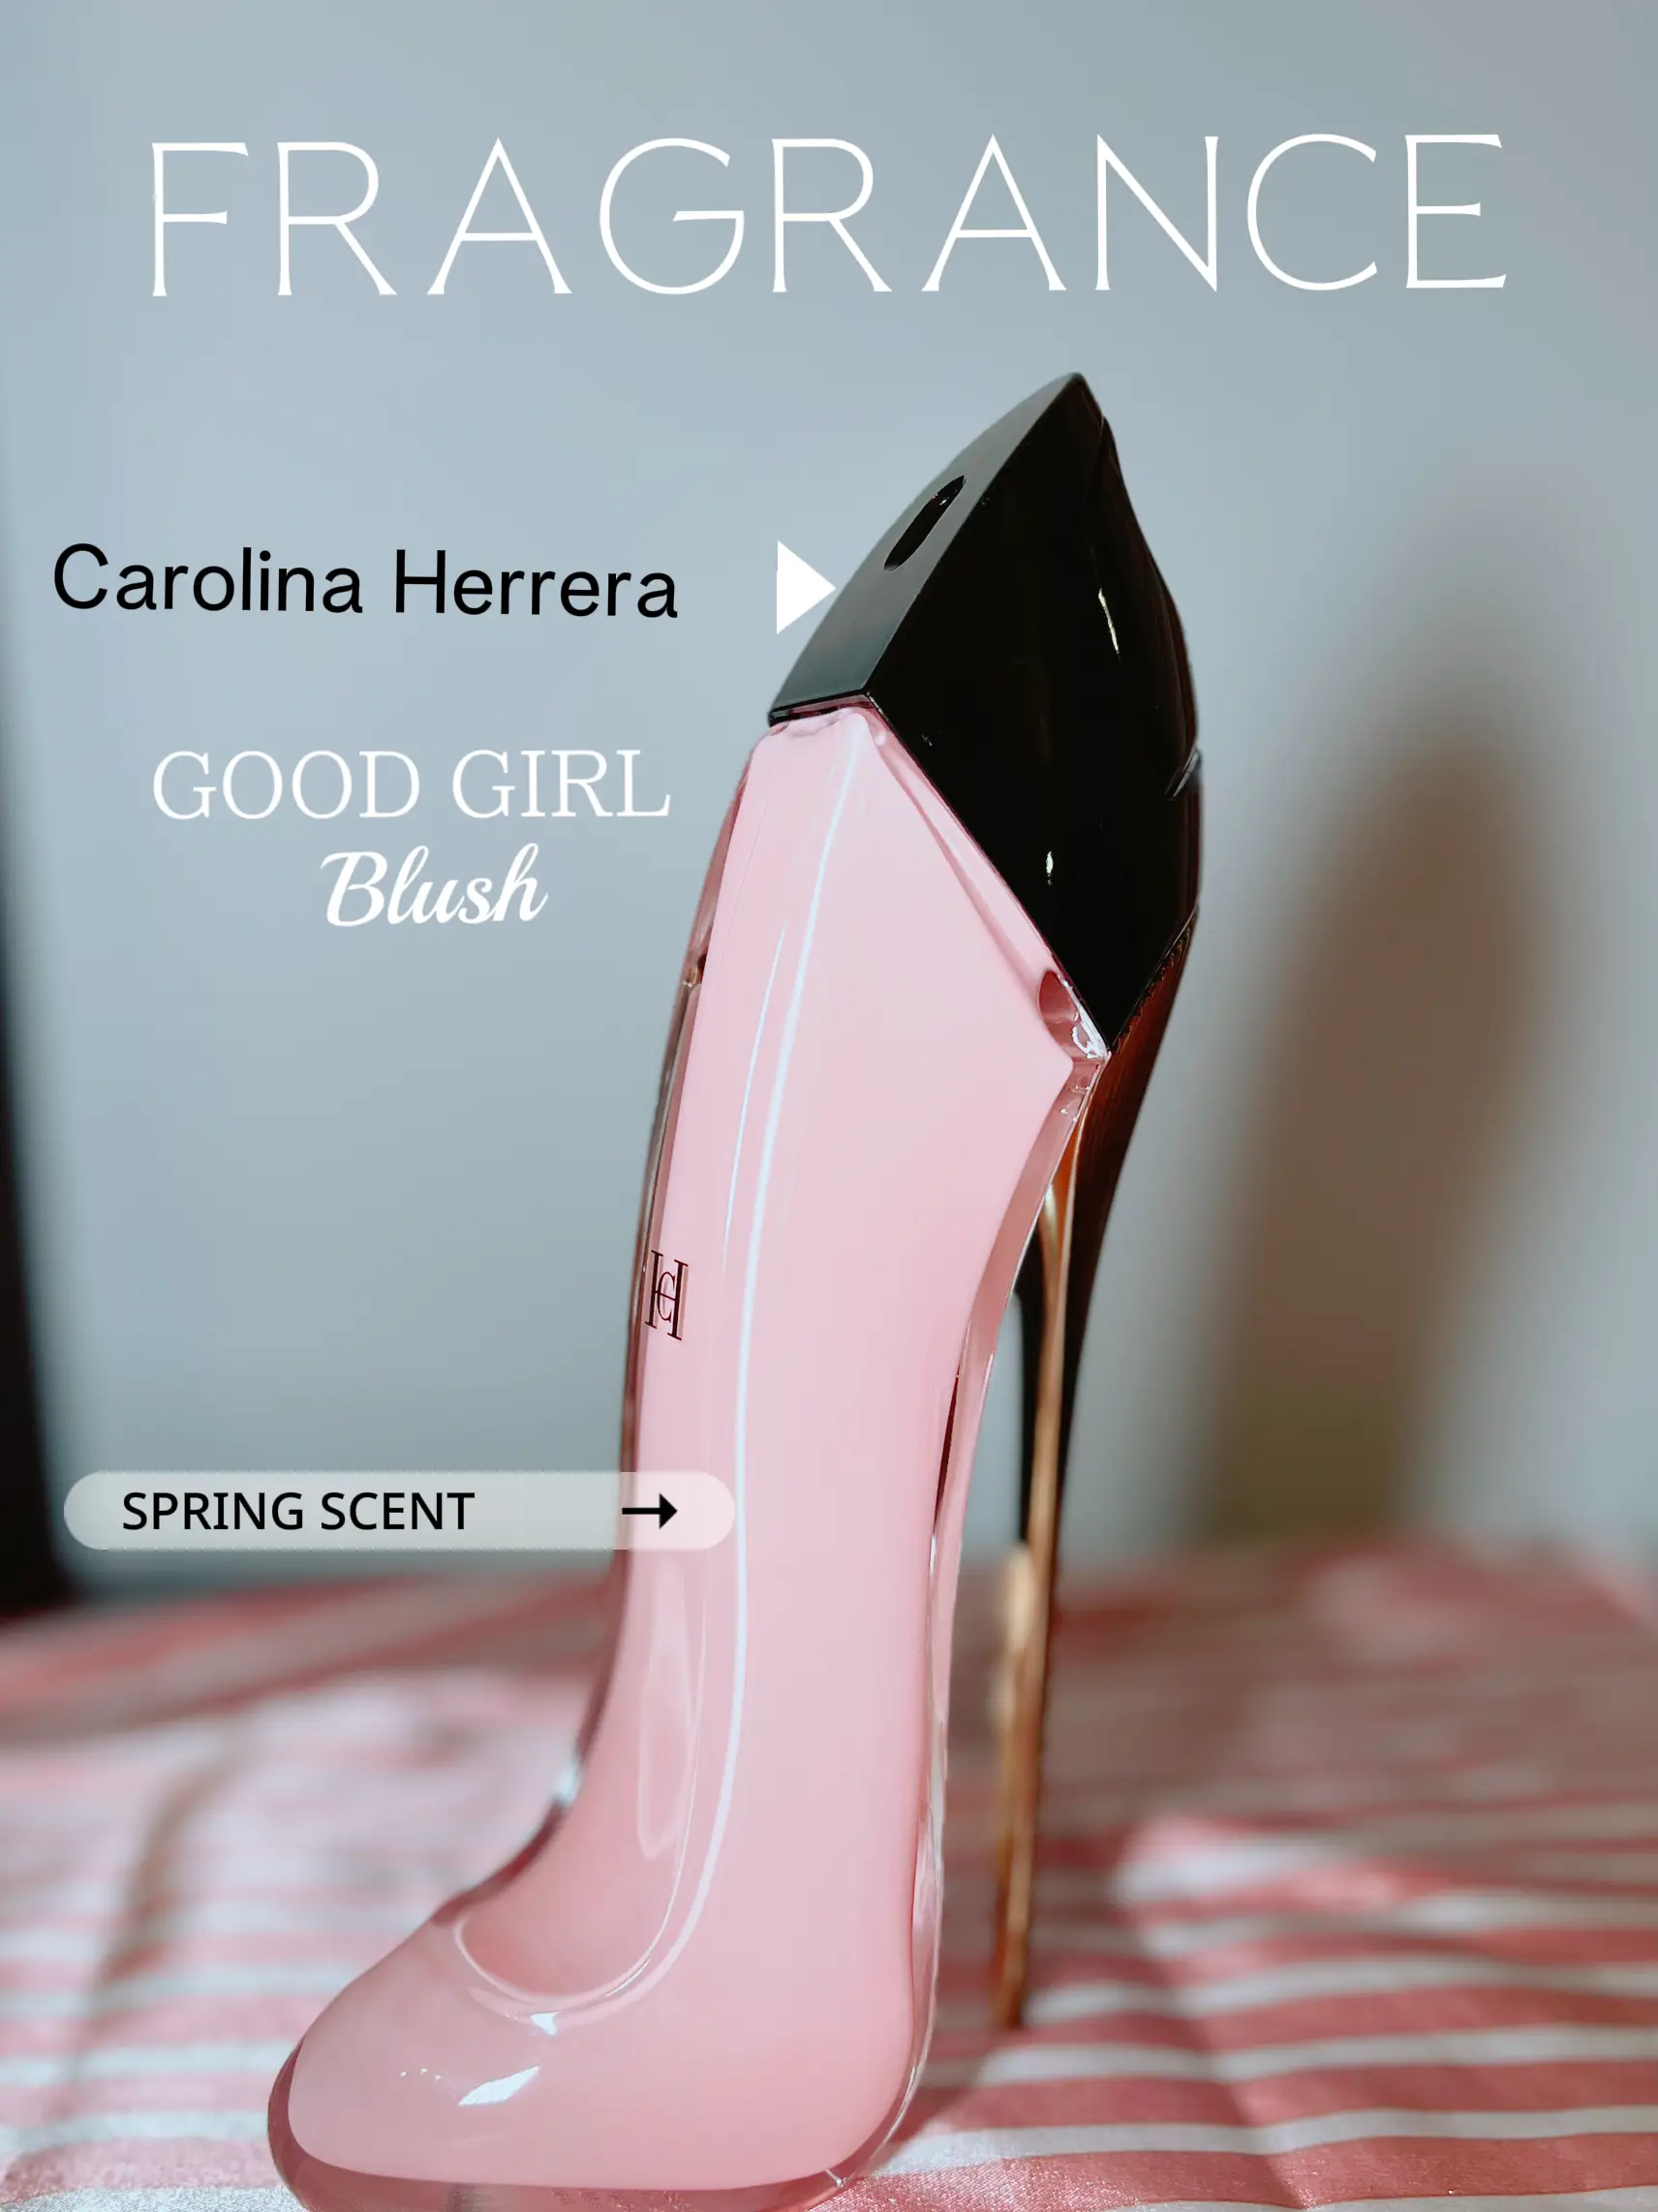 NEW CAROLINA HERRERA GOOD GIRL BLUSH FRAGRANCE REVIEW  #goodgirlcarolinaherrera #scentoftheday 